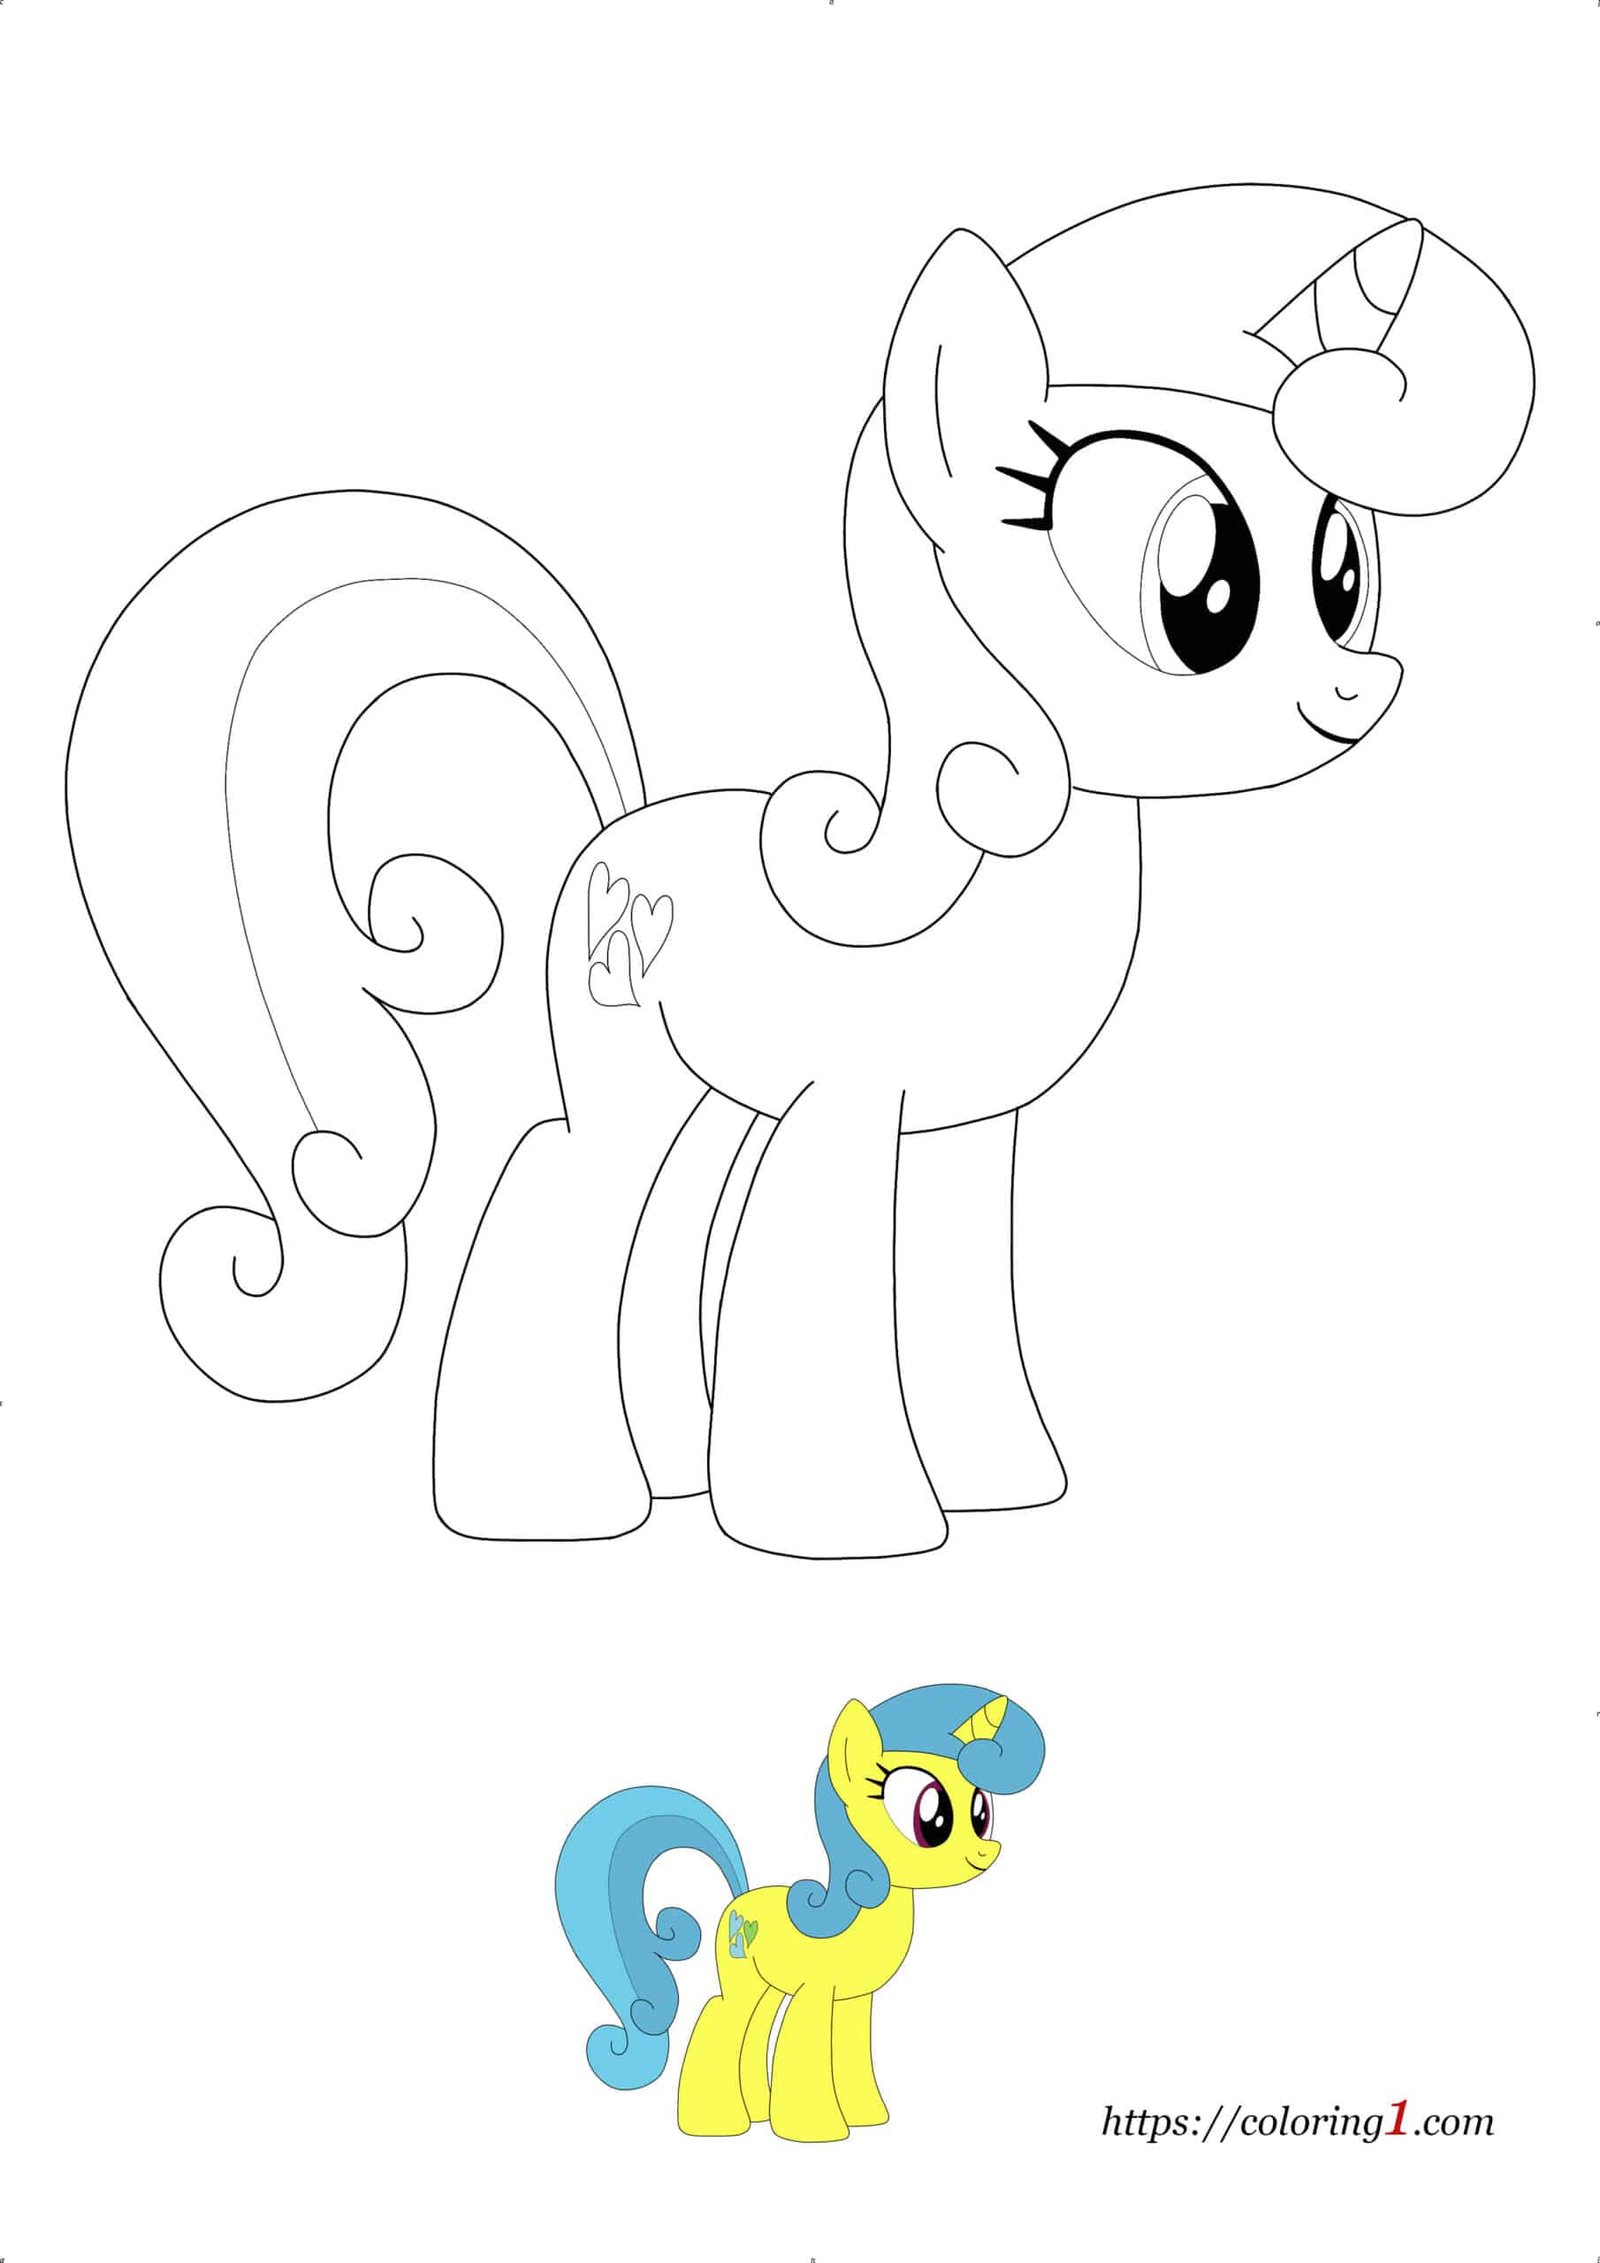 My Little Pony Lemon Hearts coloring sheet to print